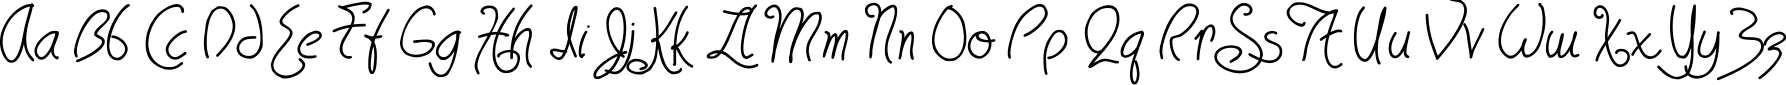 Пример написания английского алфавита шрифтом HavingWrit Bold